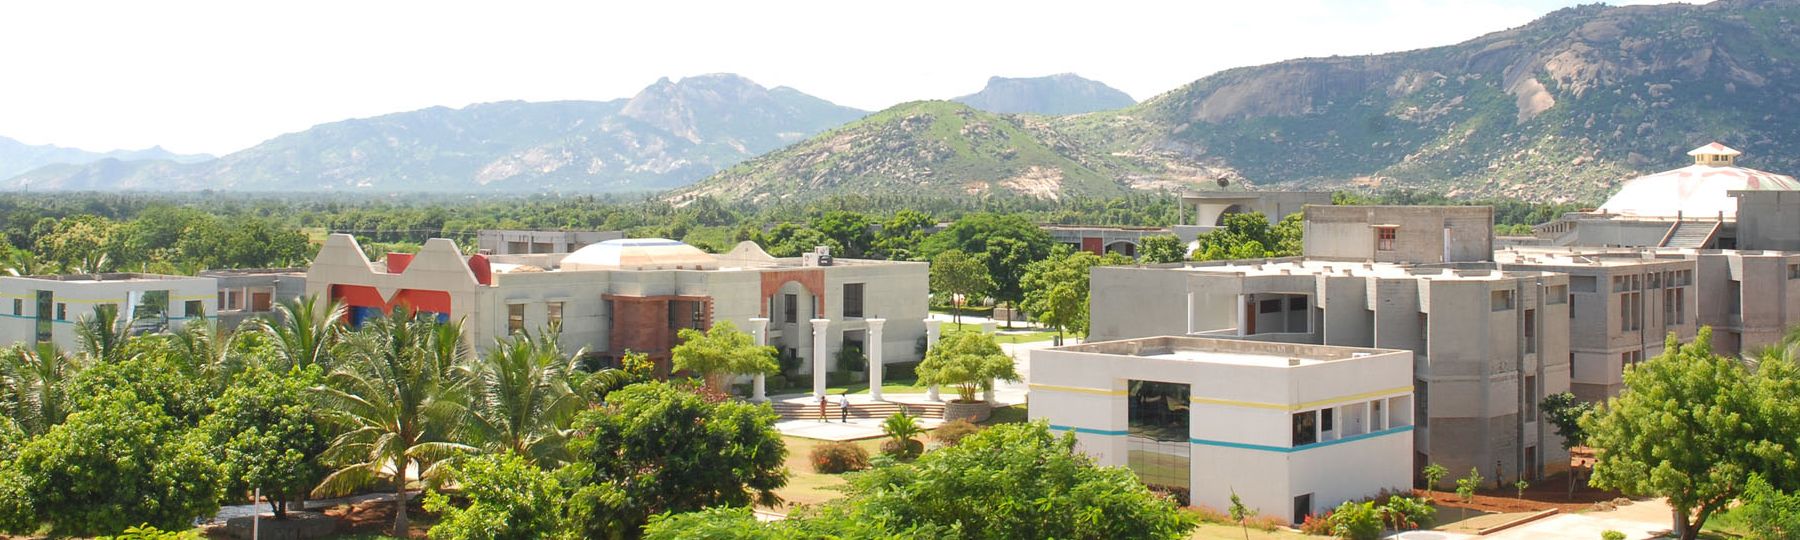 Mohan Babu University Campus View(3)